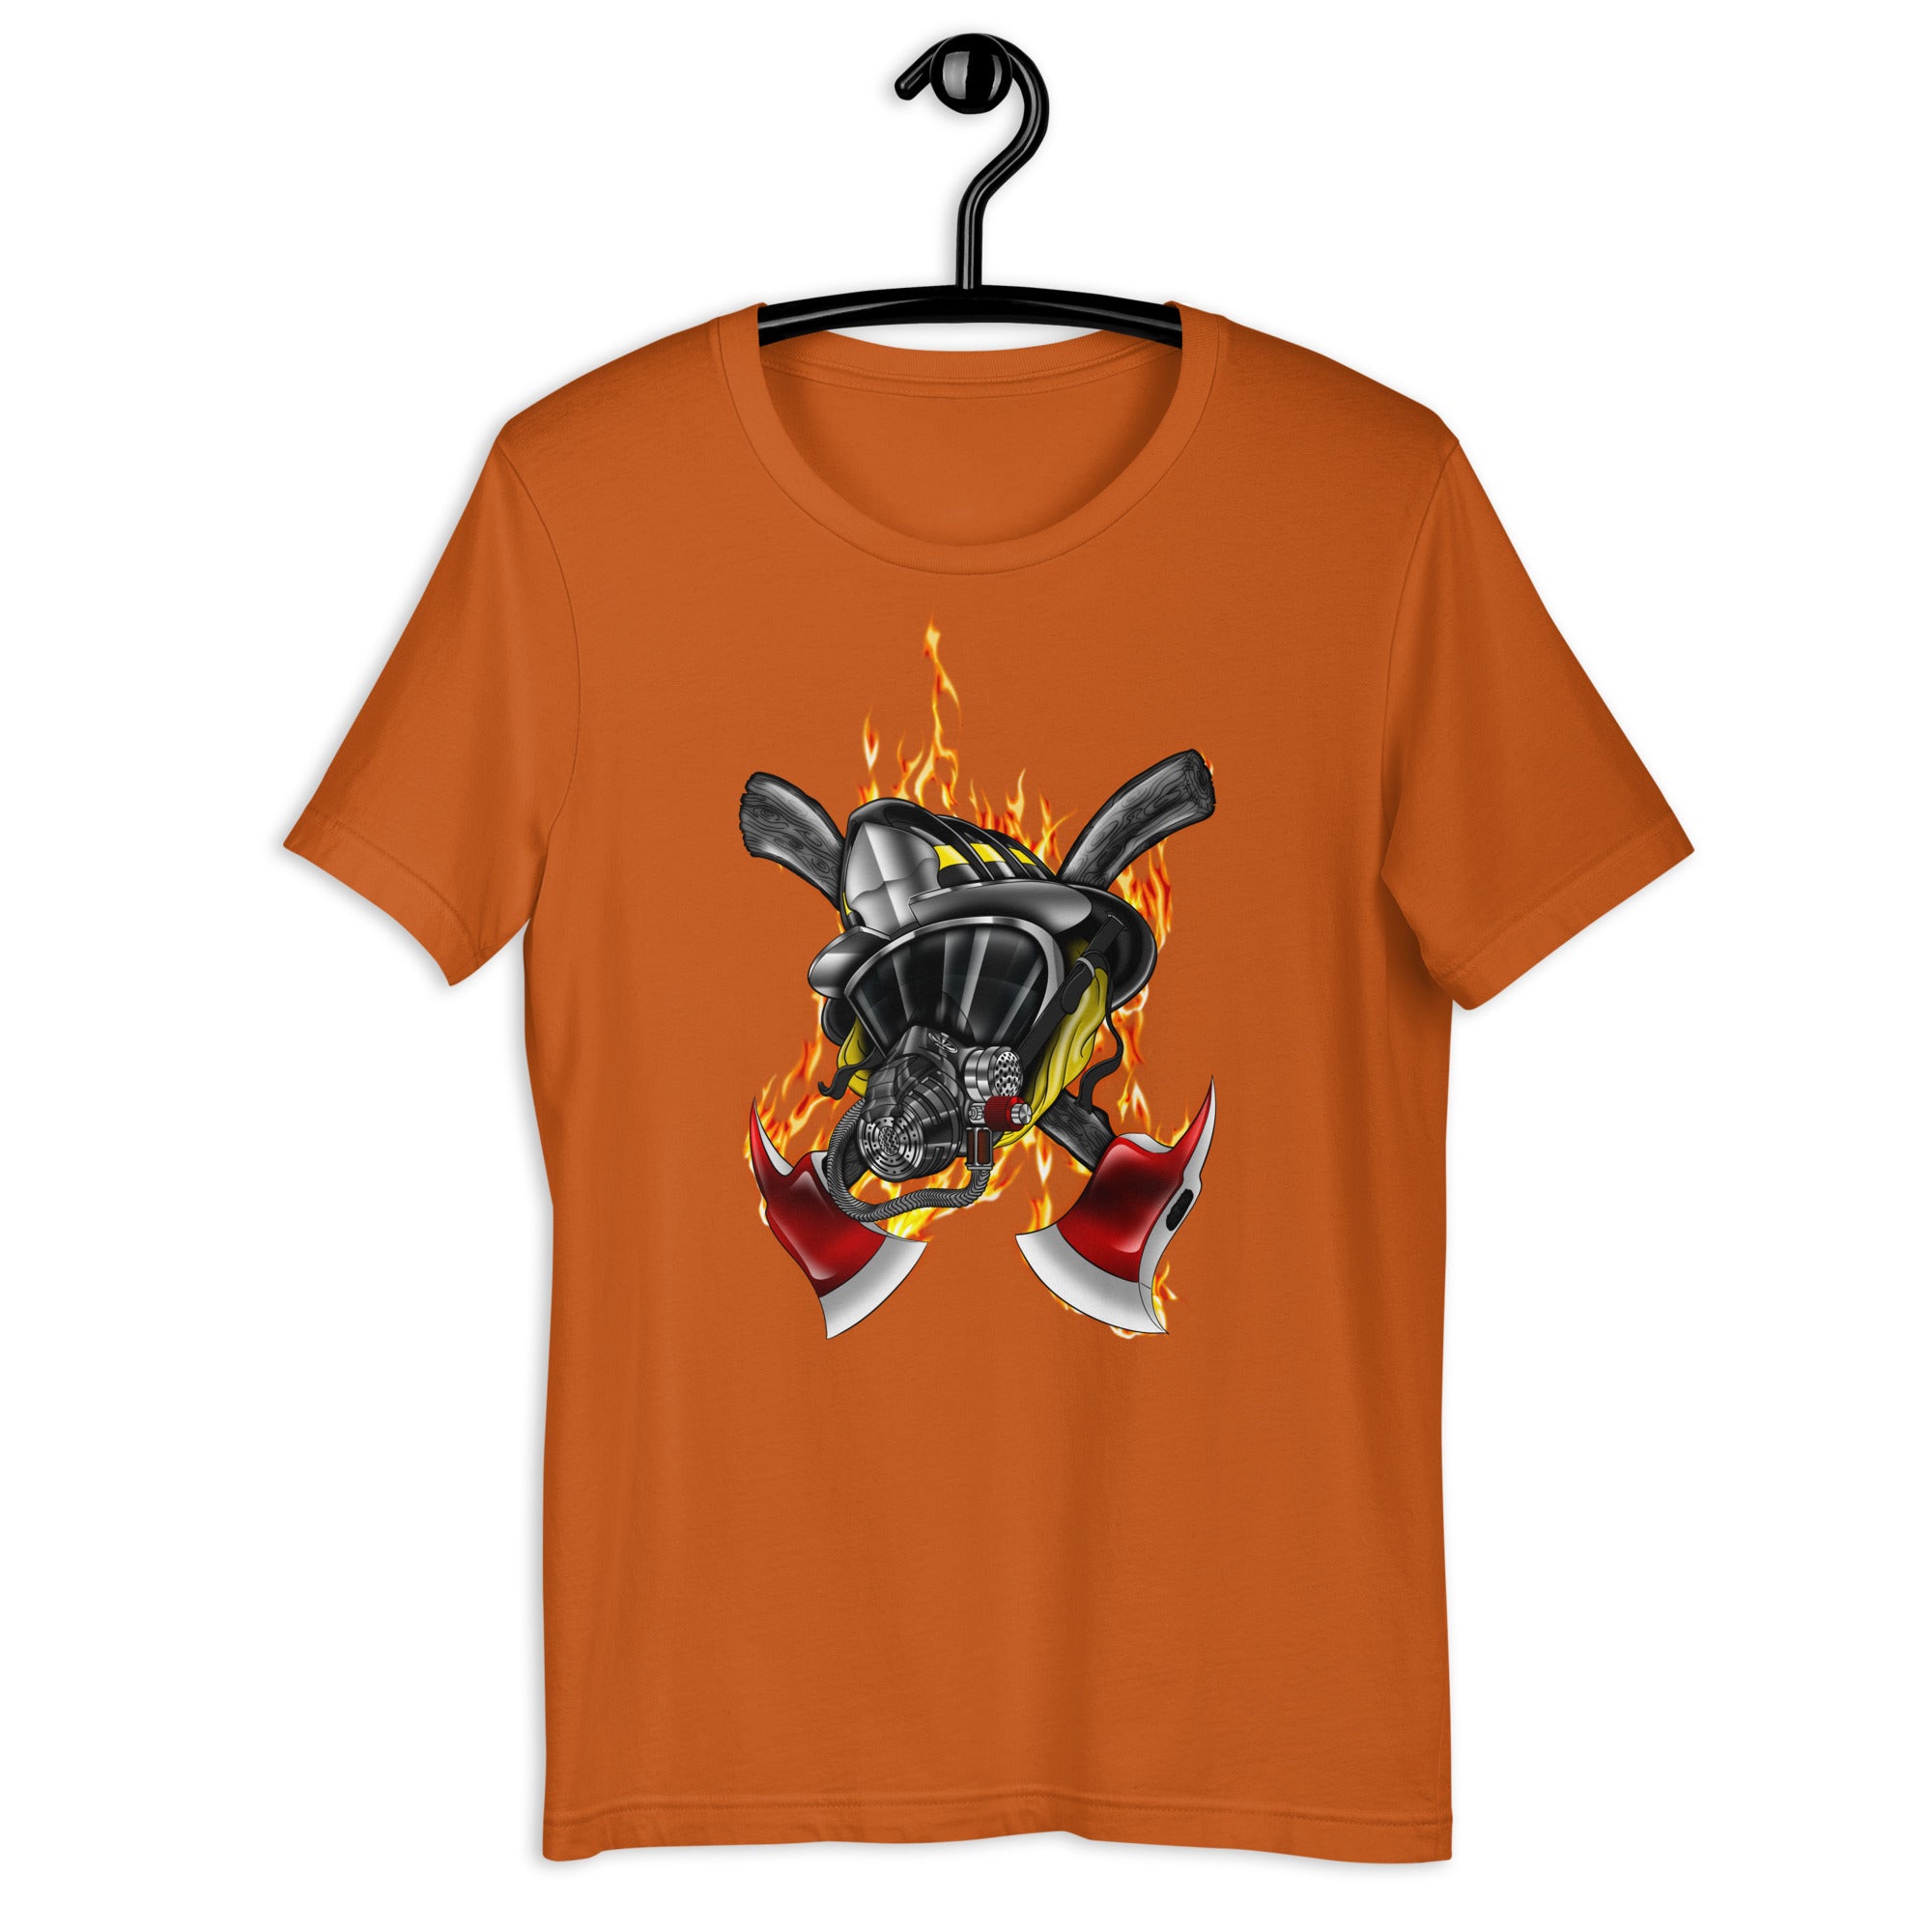 Feuerwehrmann Flammen Herren-T-Shirt